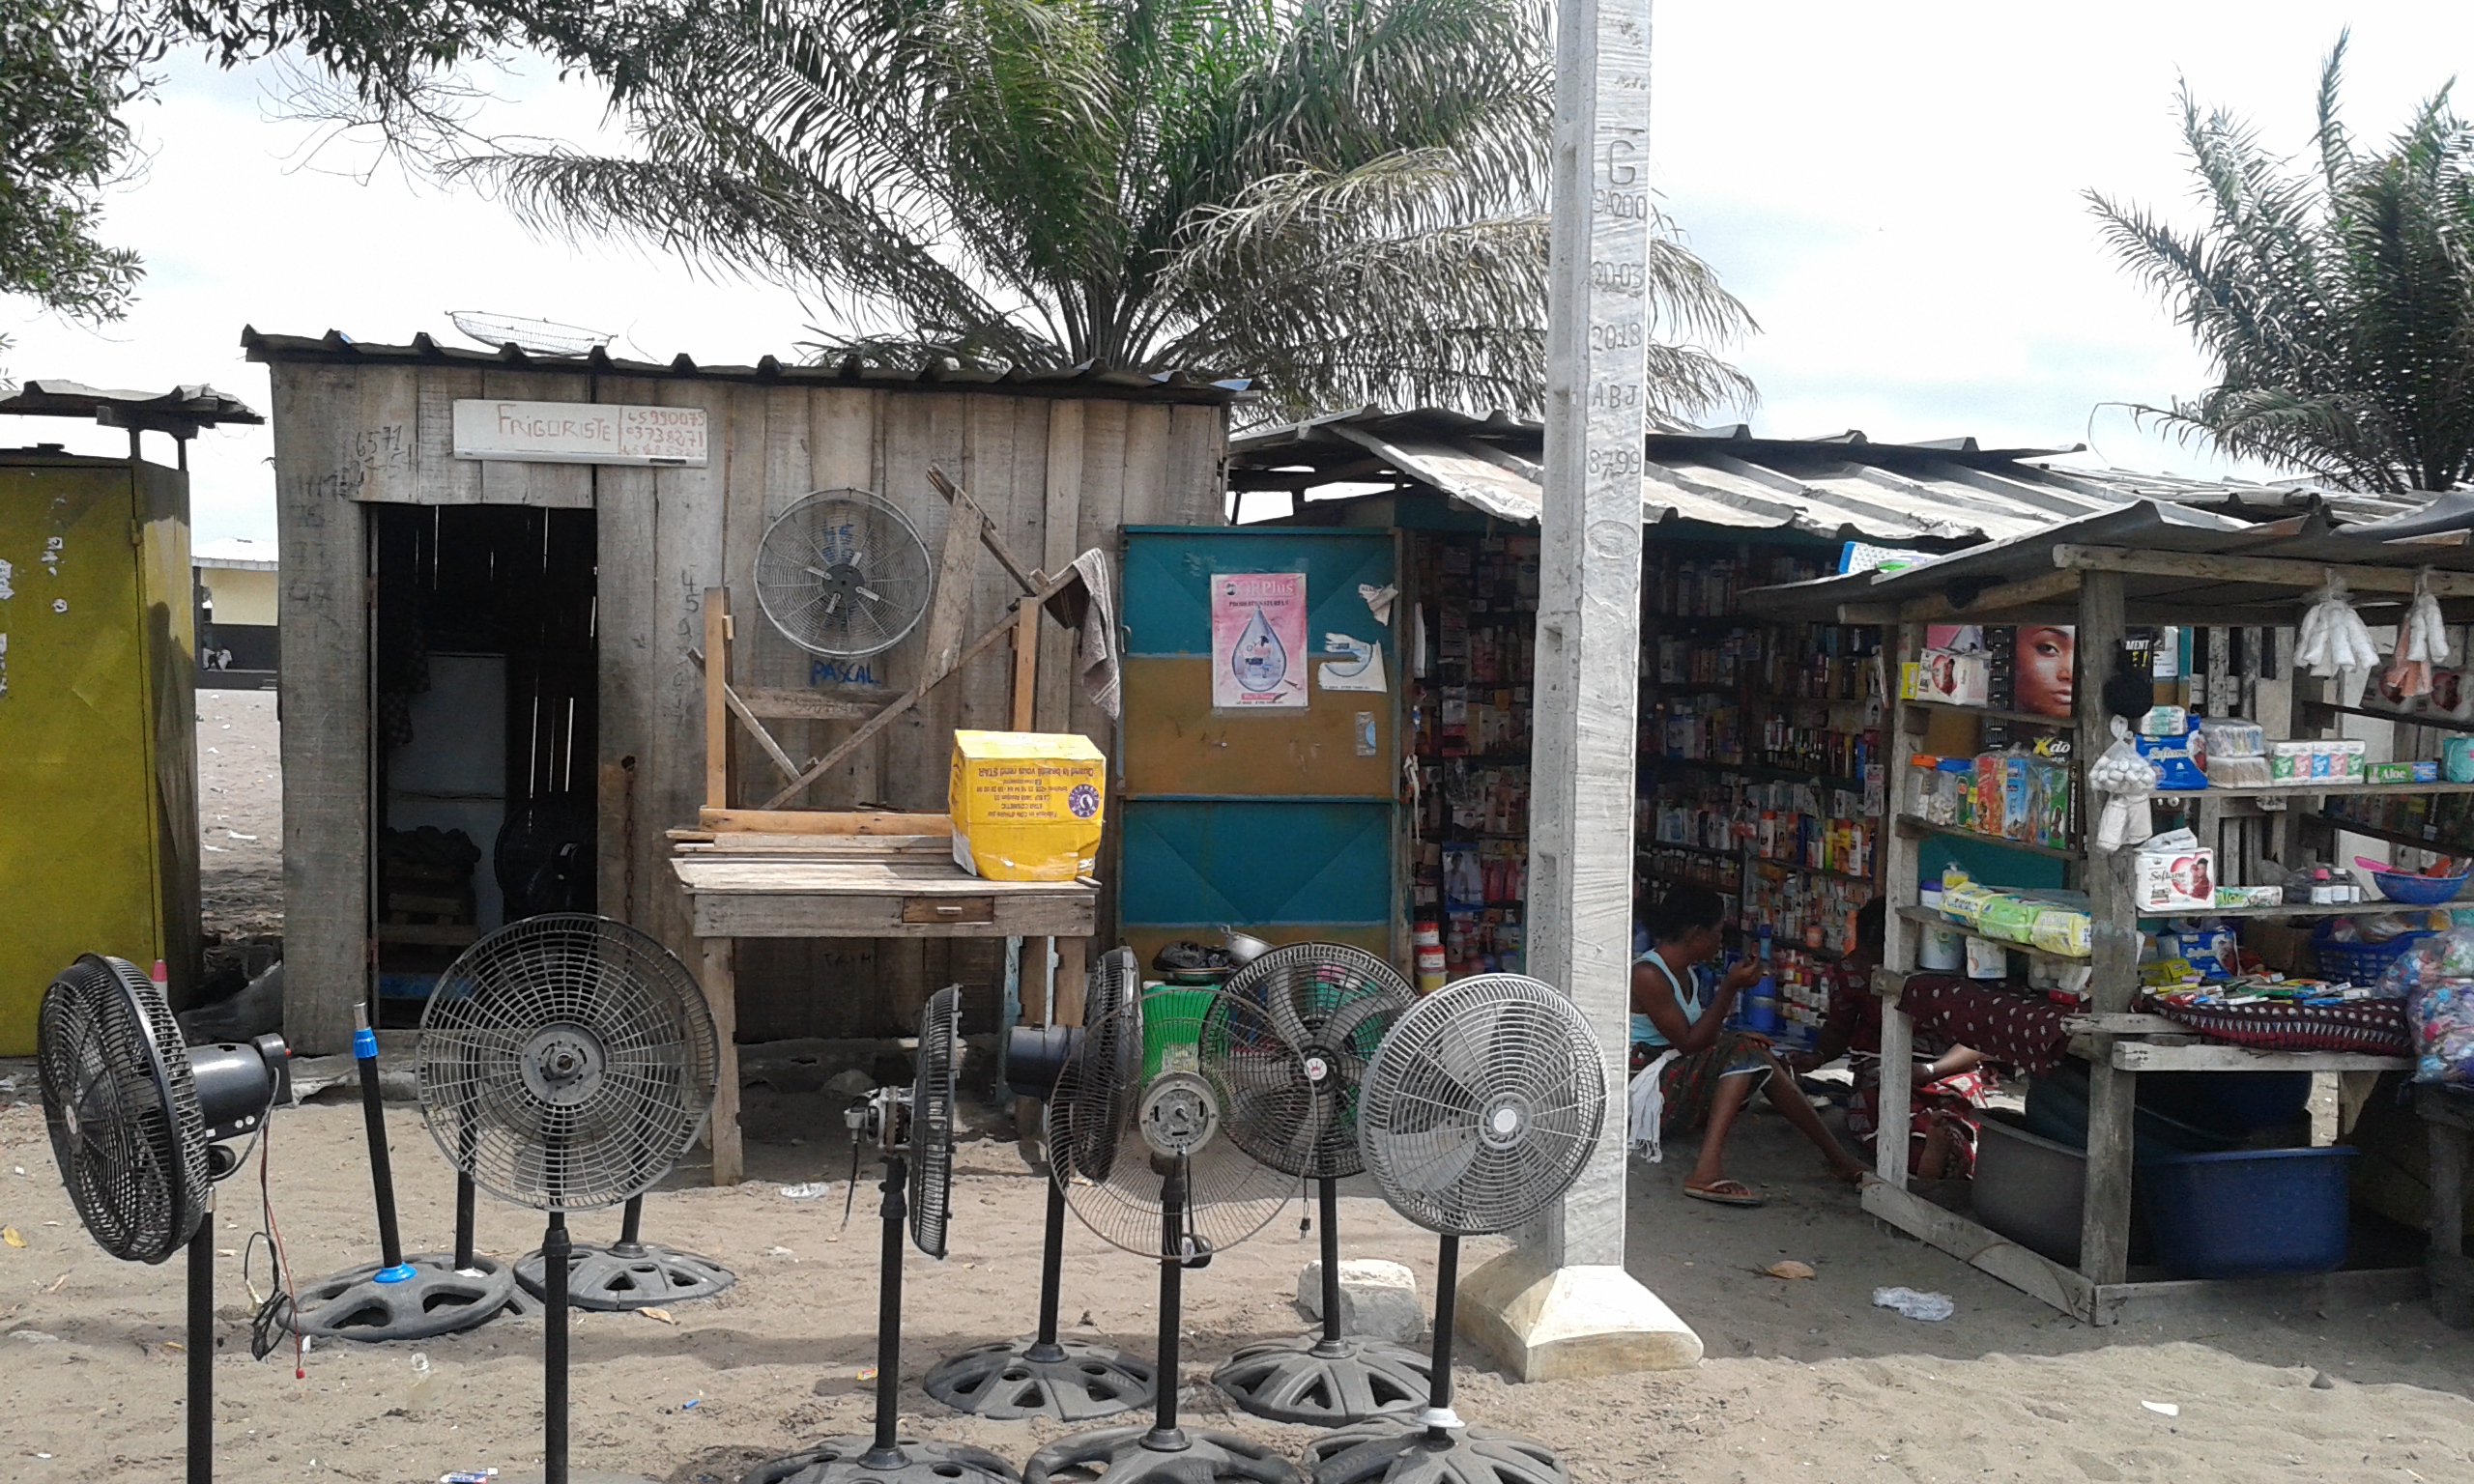 Small retail business in Abidjan.